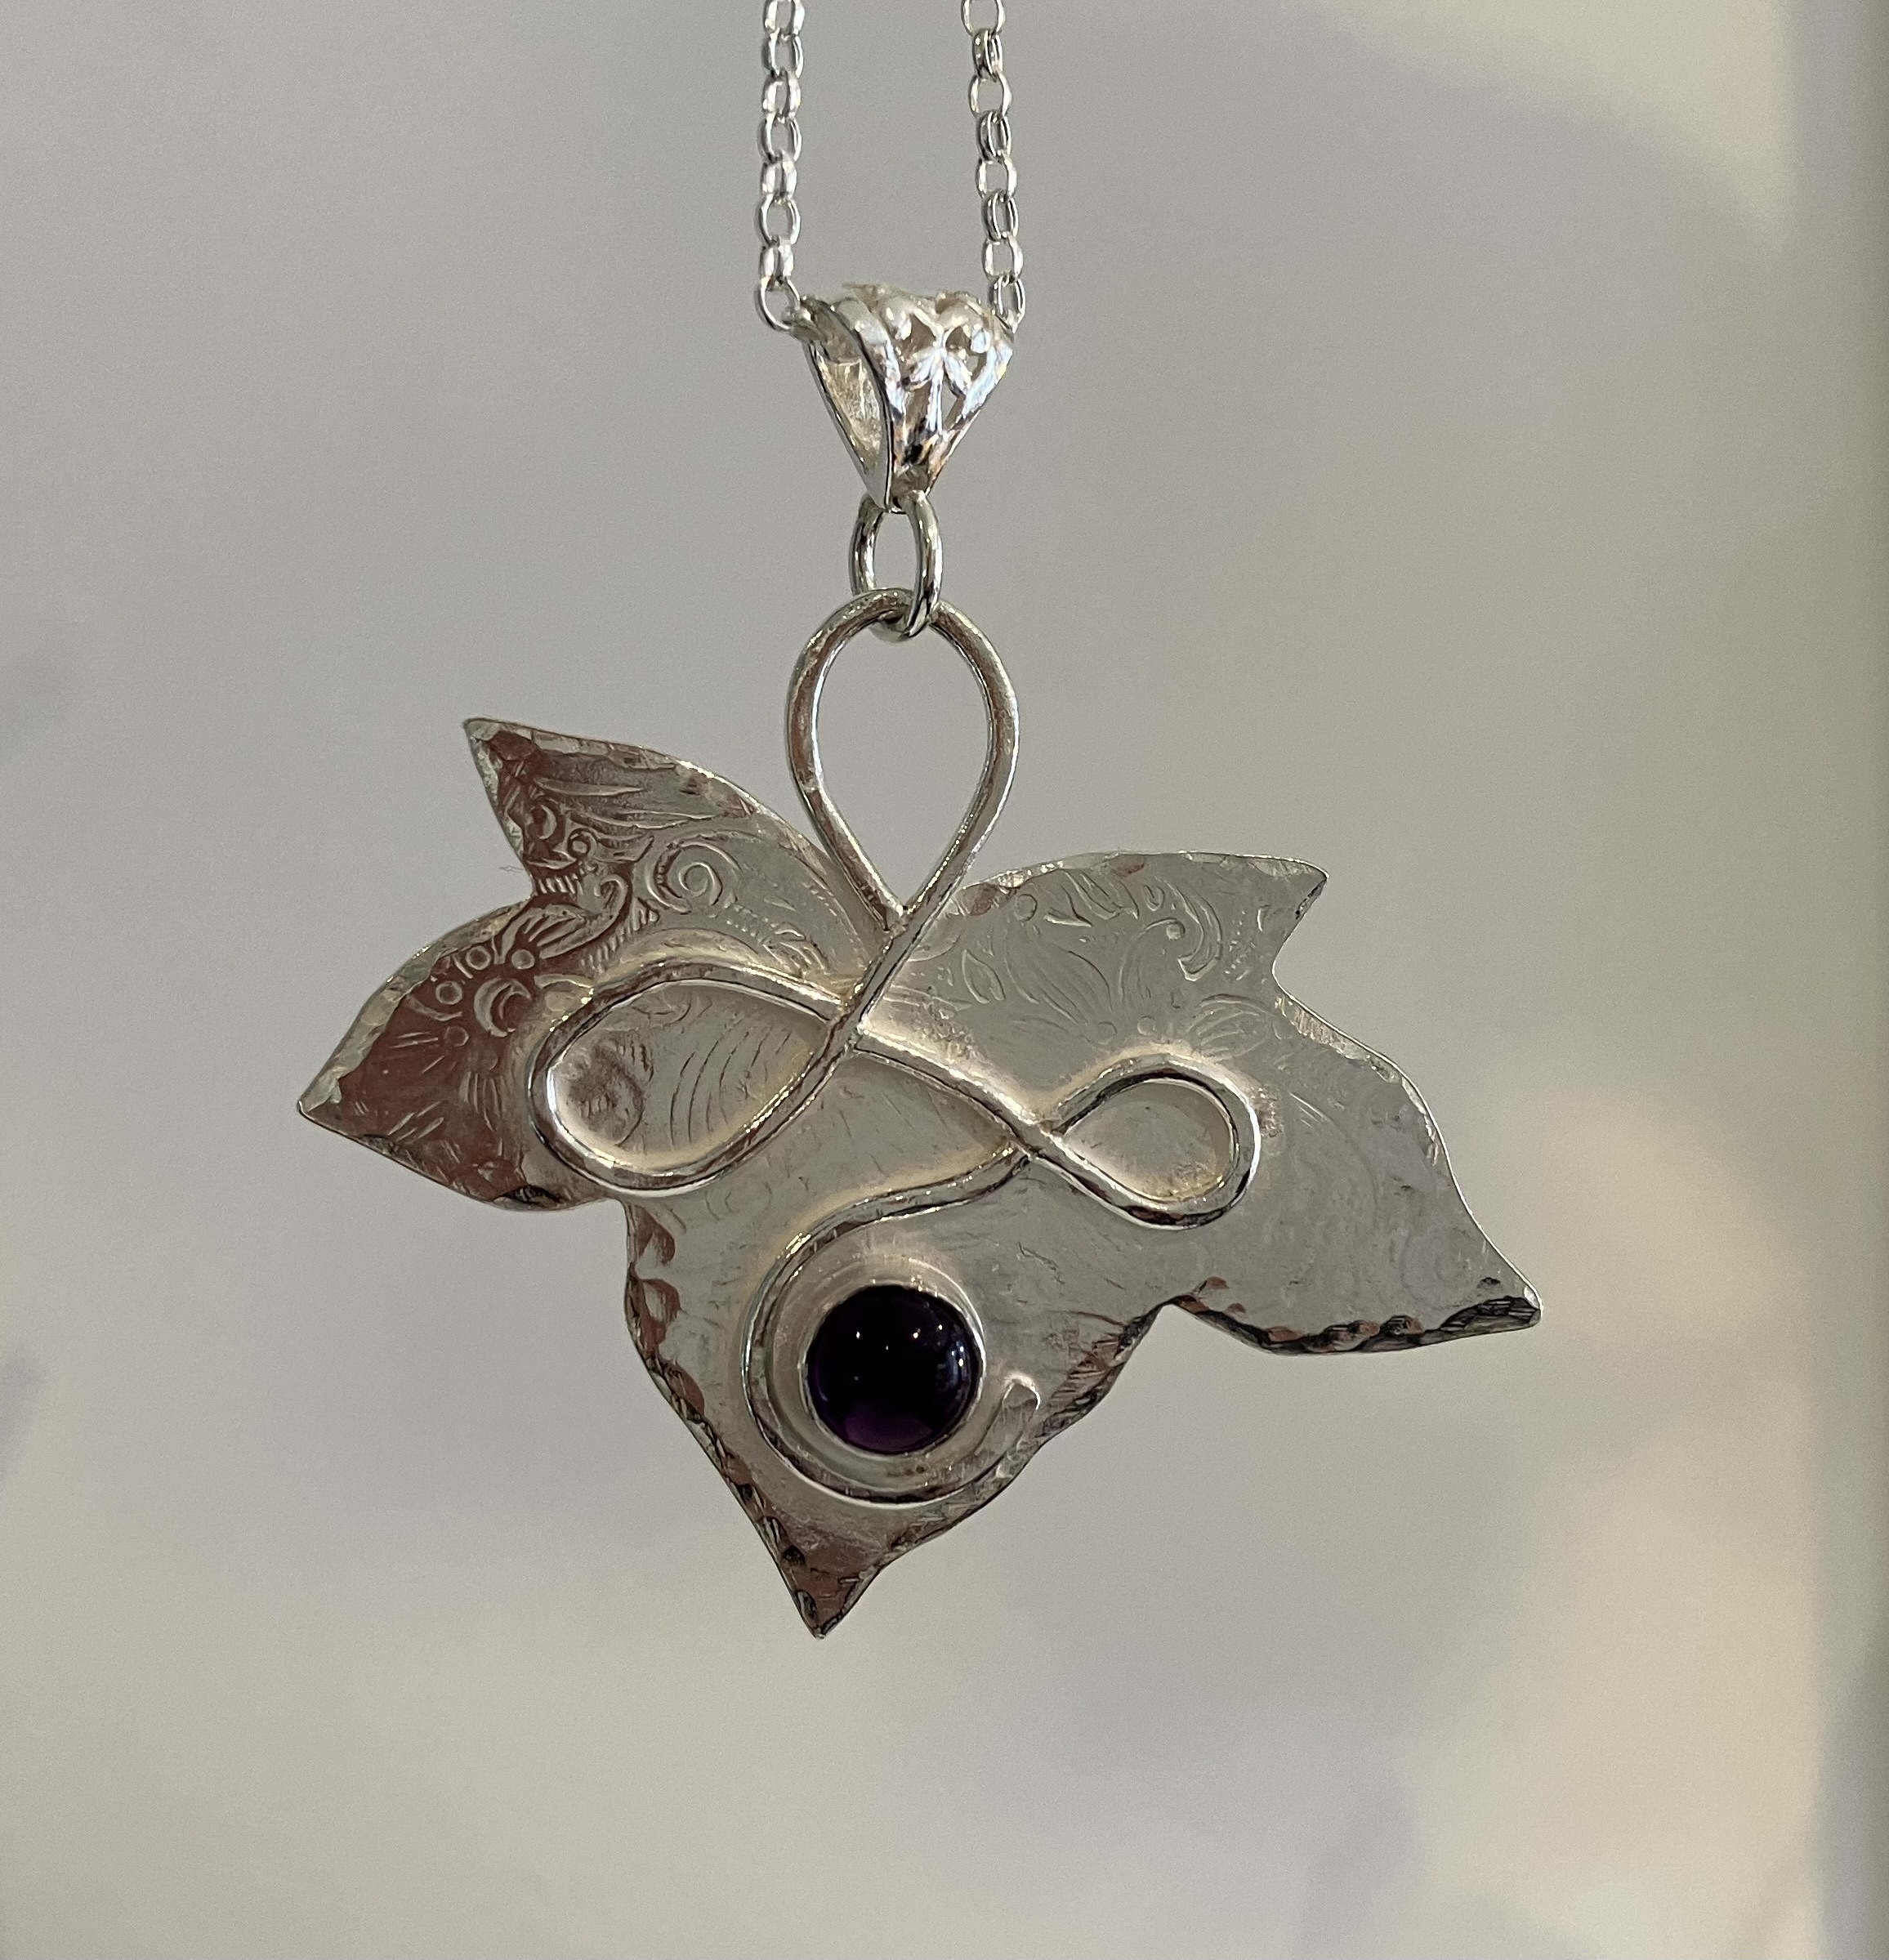 Silver leaf amethyst pendant with filigree bale